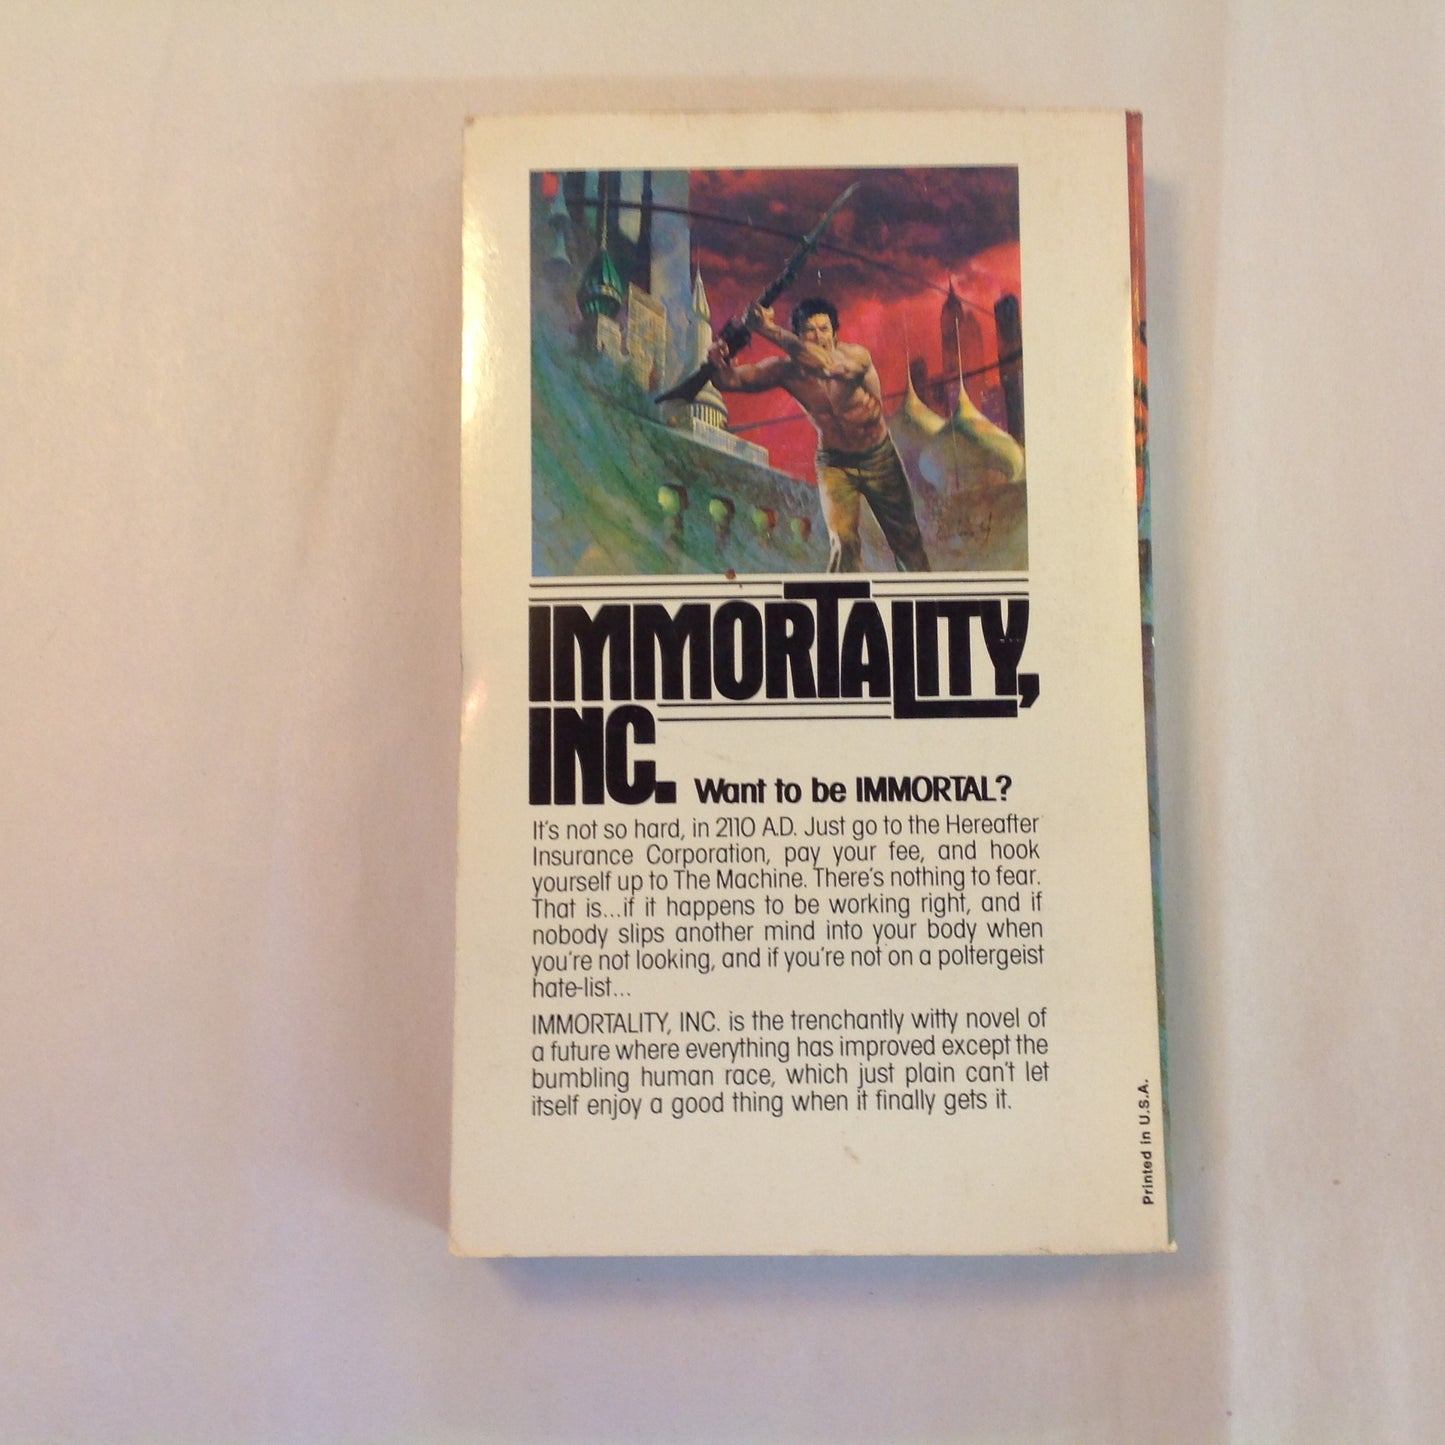 Vintage 1978 Mass Market Paperback Immortality, Inc. Robert Sheckley